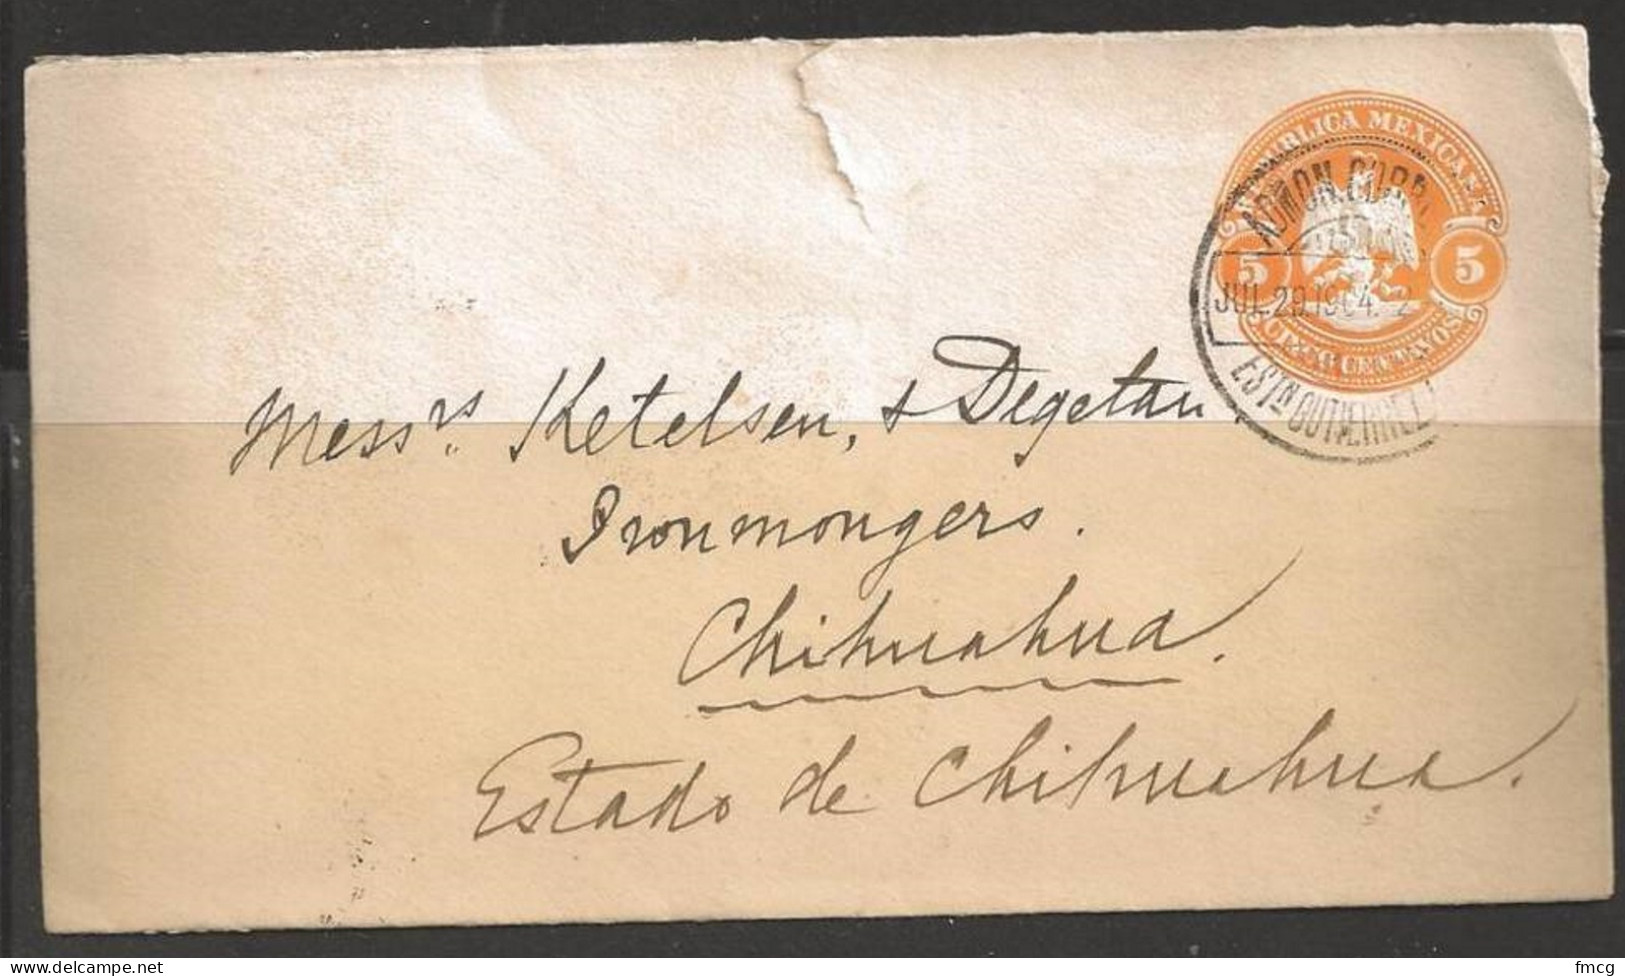 Mexico 1904 5c Postal Envelope Used Jul 29 1904, Chinuahua - Mexico